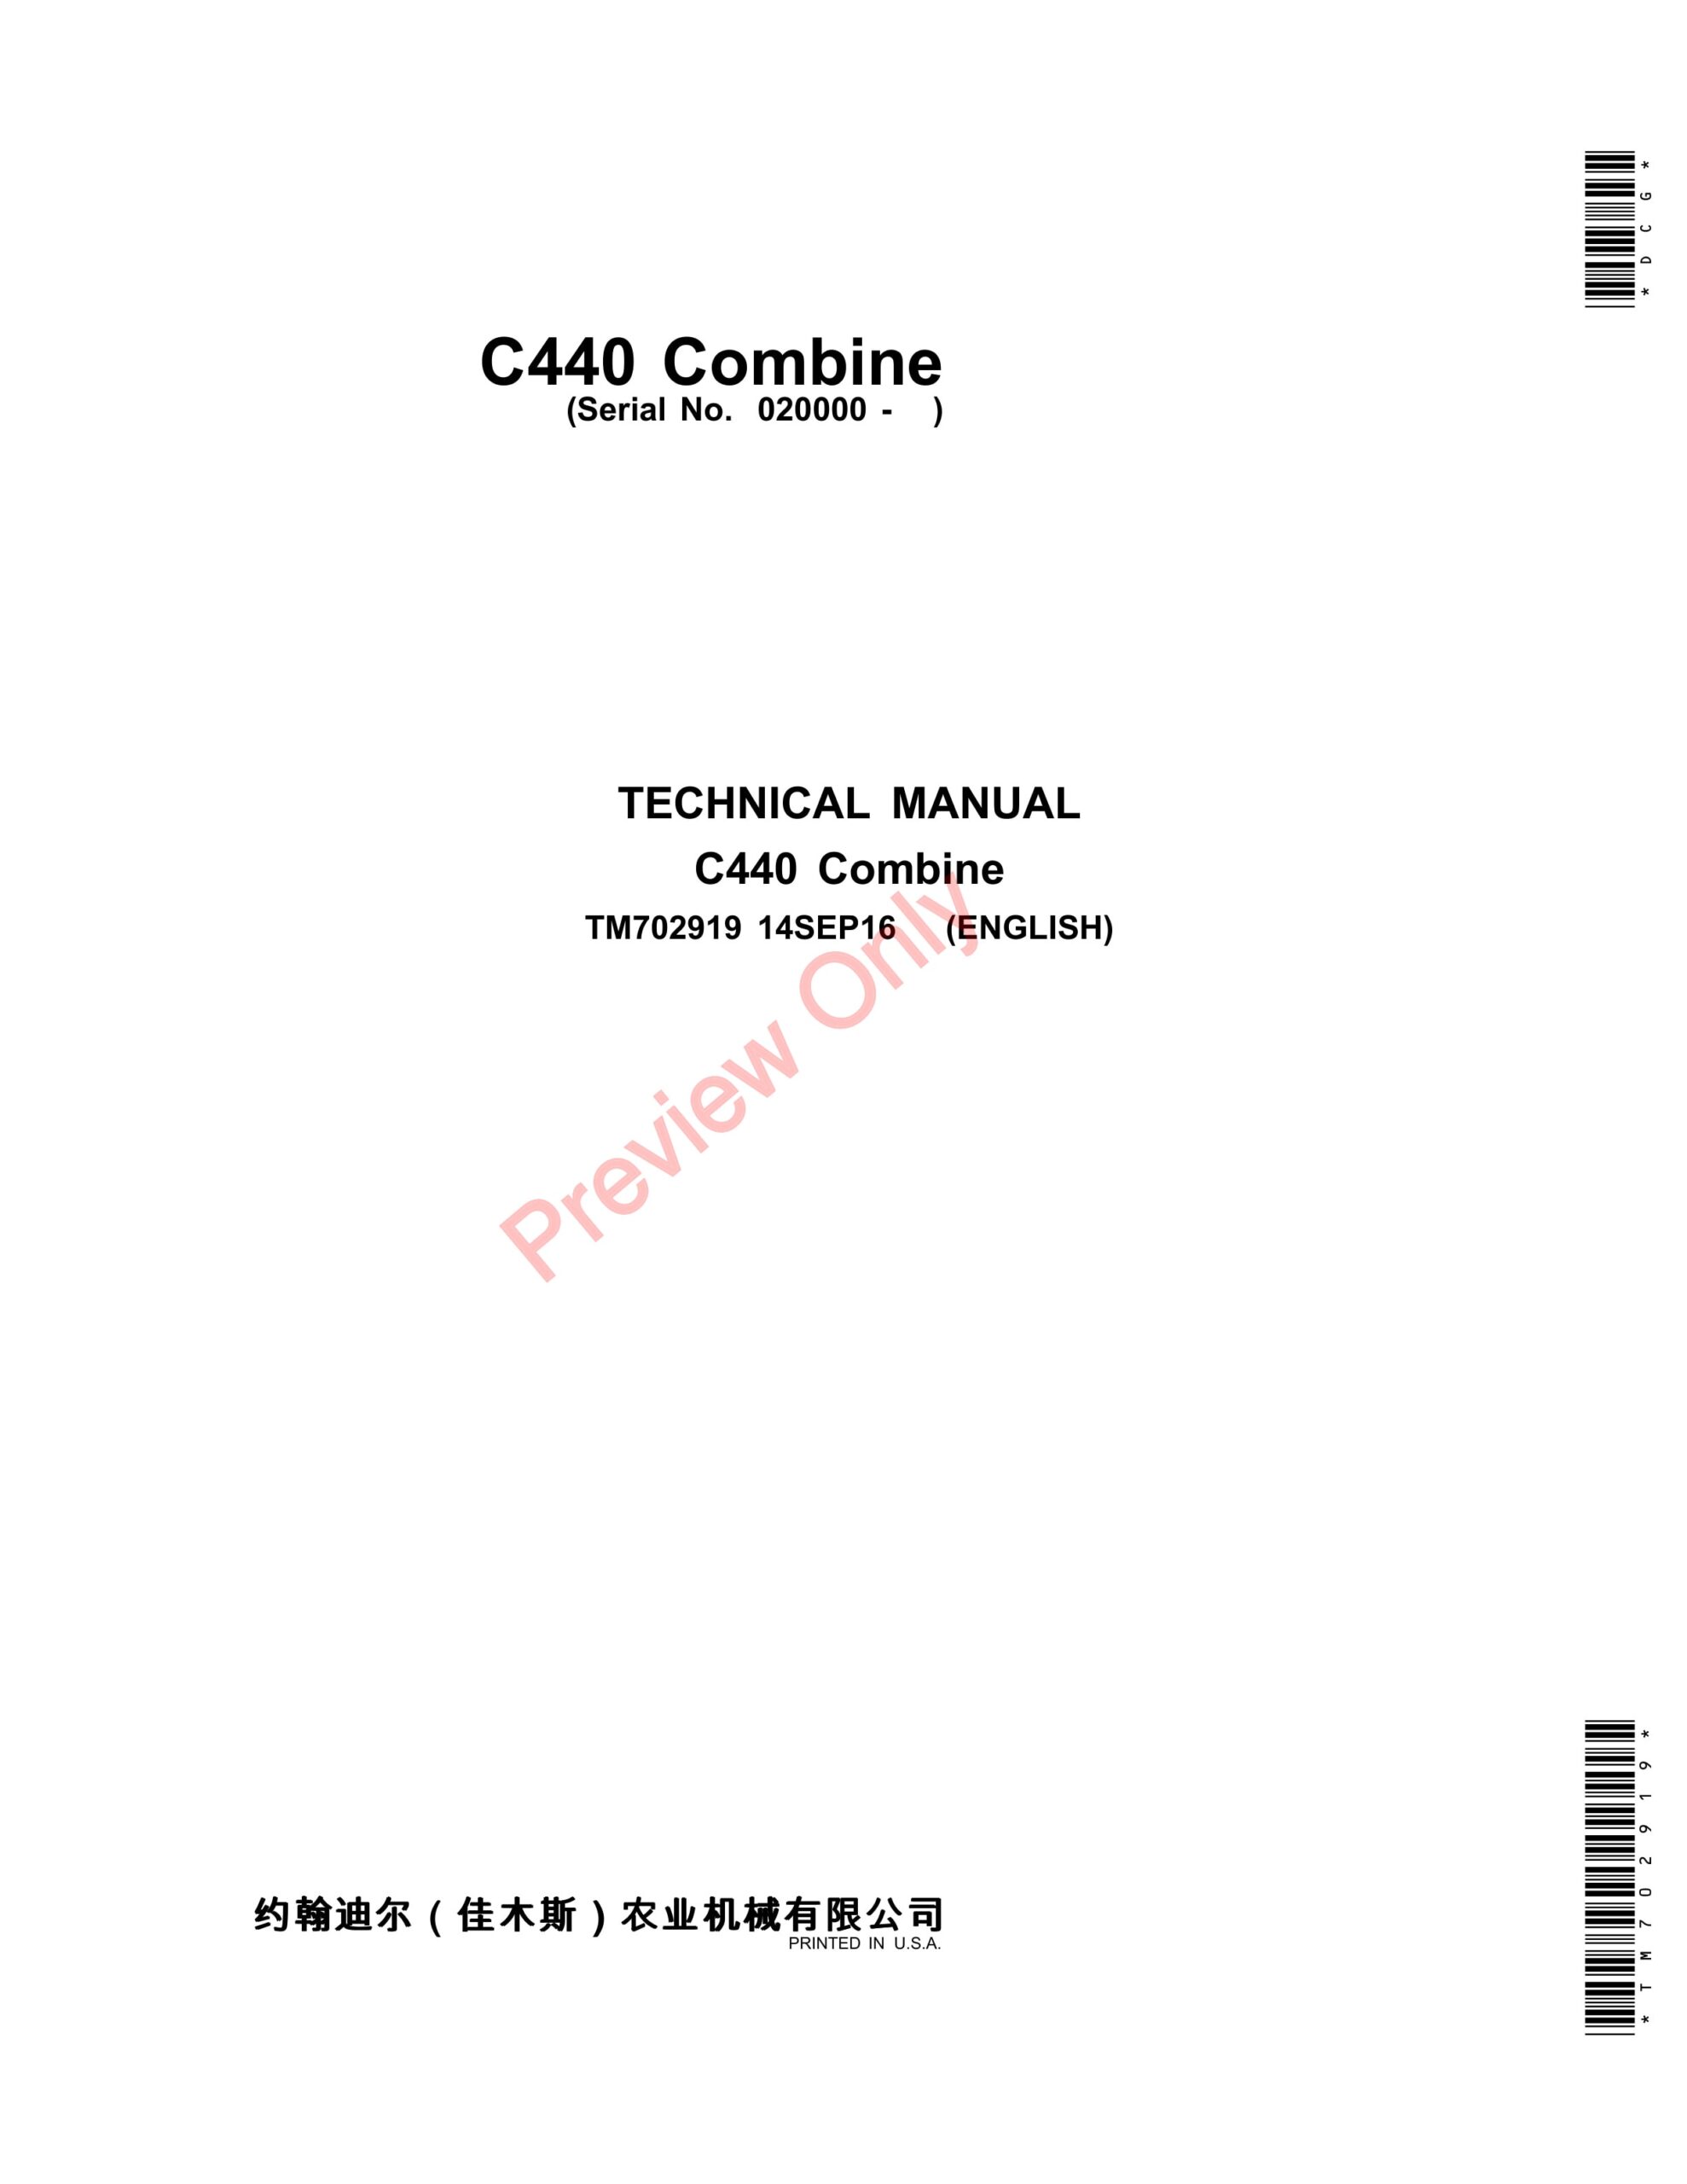 John Deere C440 Combine Technical Manual TM702919 14SEP16-1